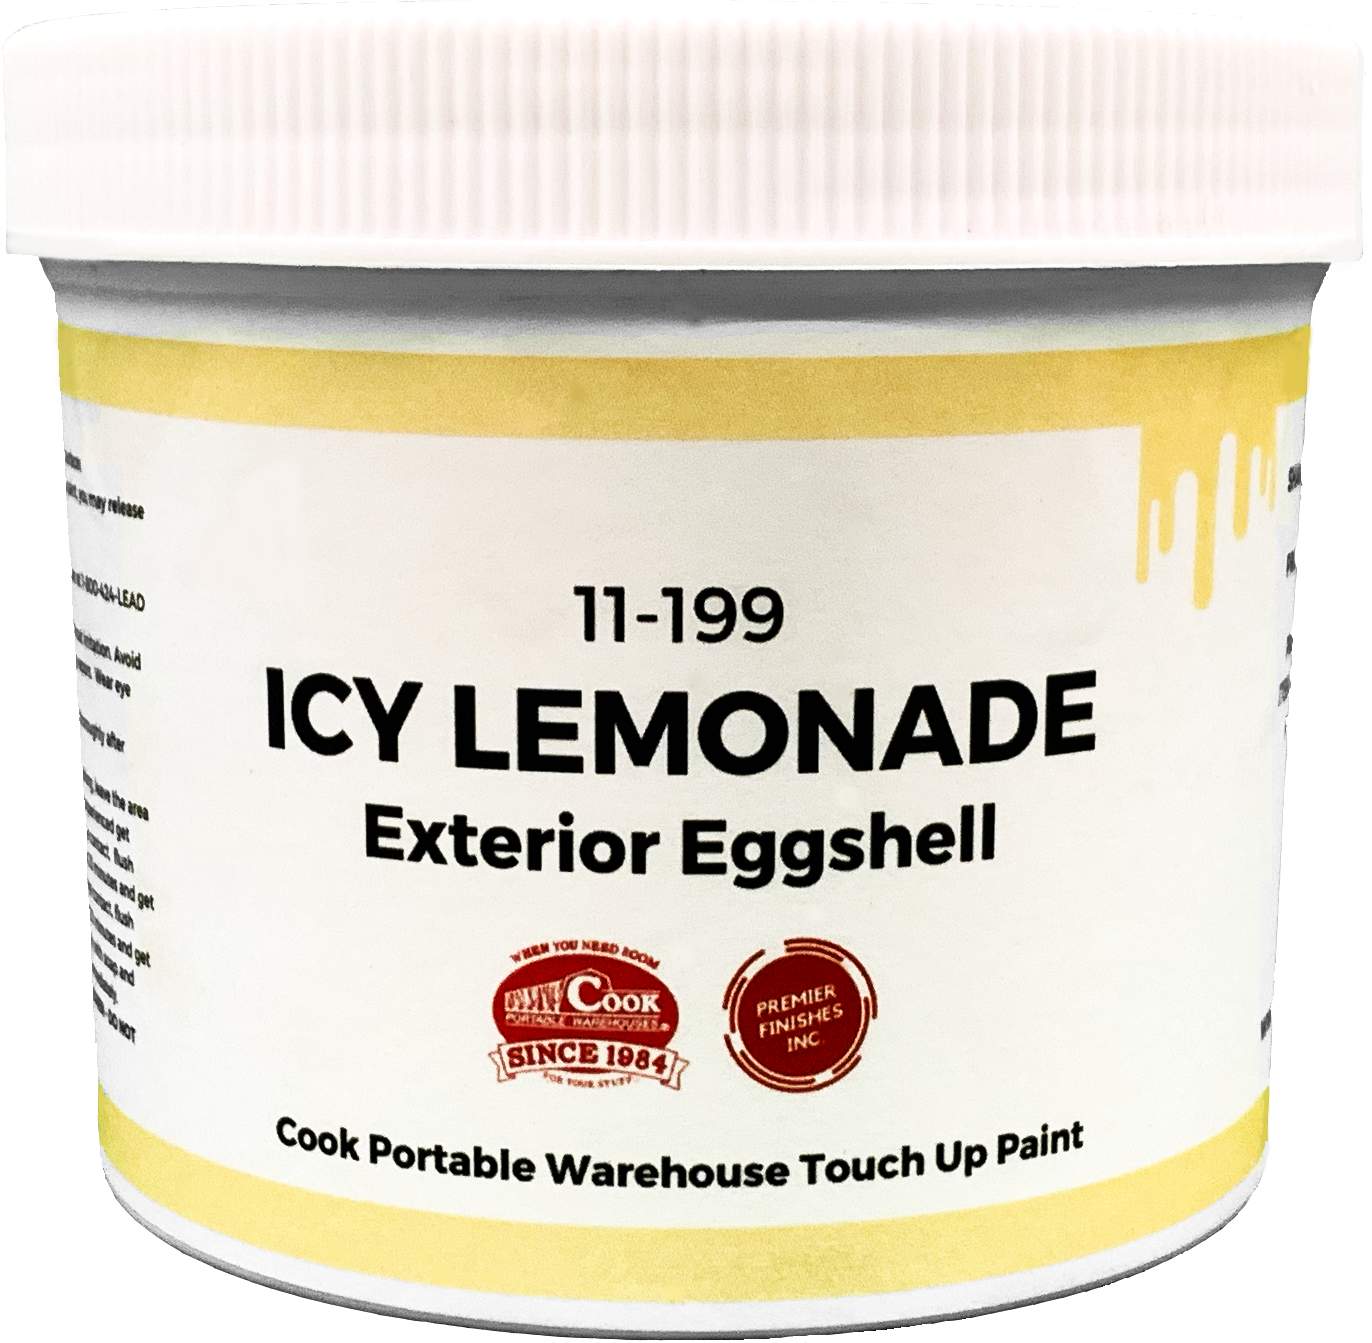 11-199 - 100% Acrylic Exterior - EggShell - Icy Lemonade